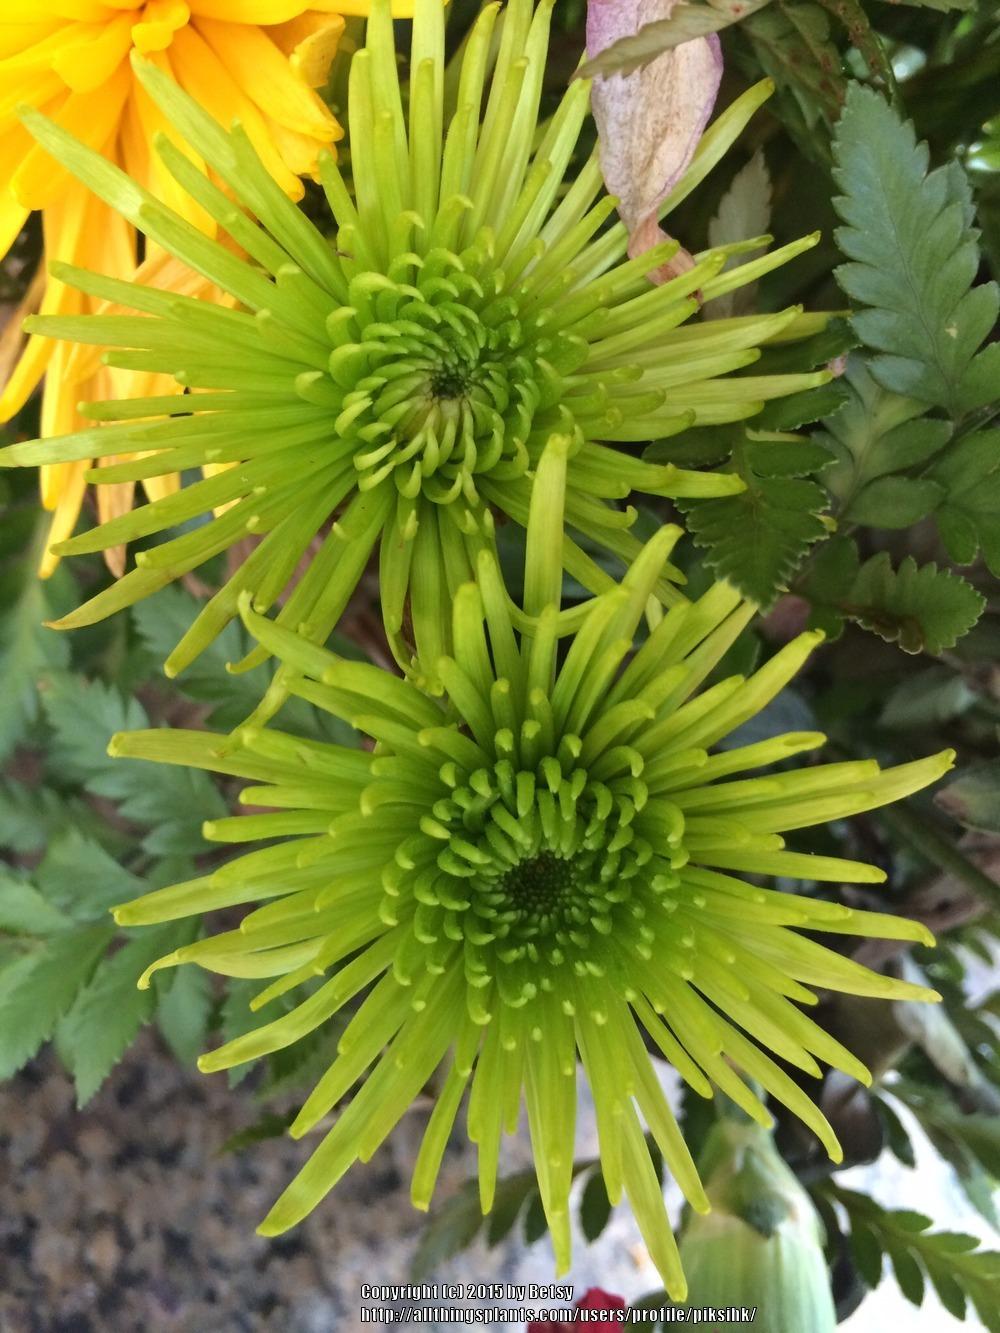 Photo of Chrysanthemum uploaded by piksihk